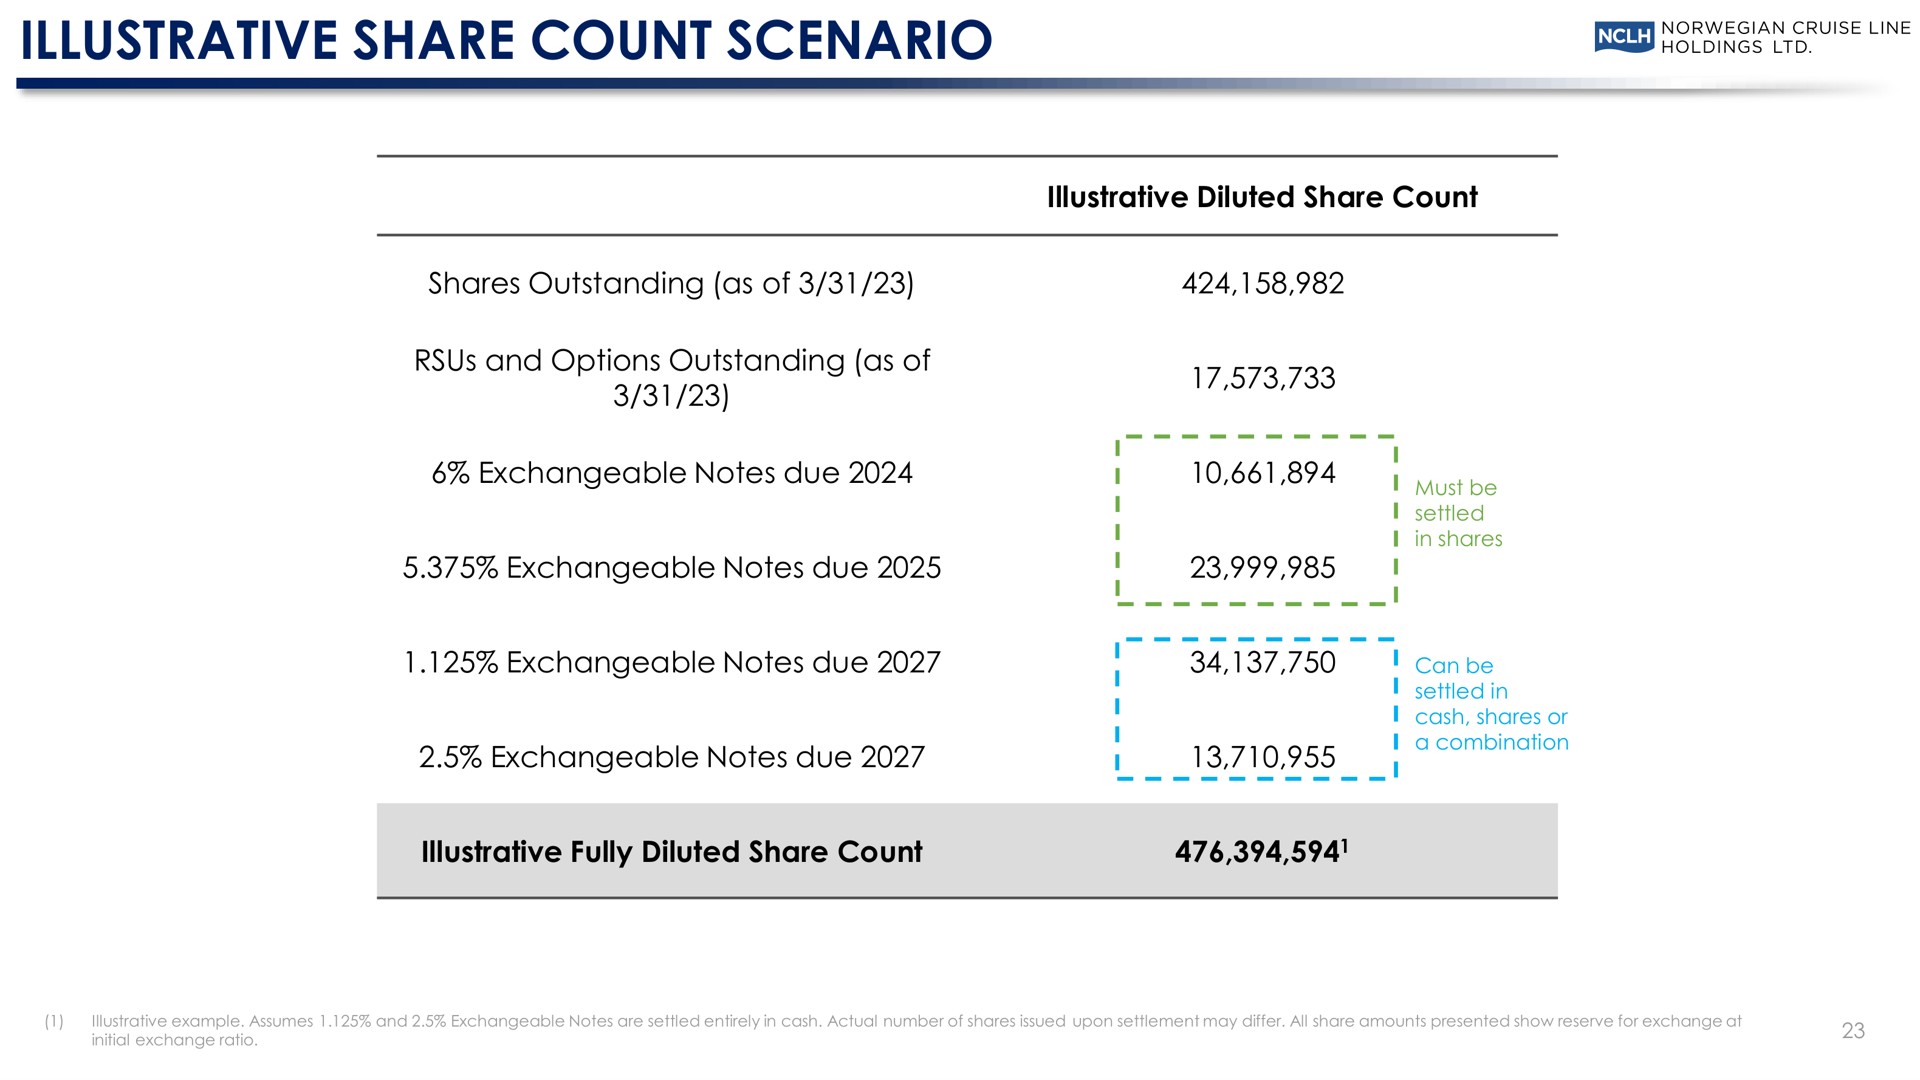 illustrative share count scenario cruise line exchangeable notes due | Norwegian Cruise Line